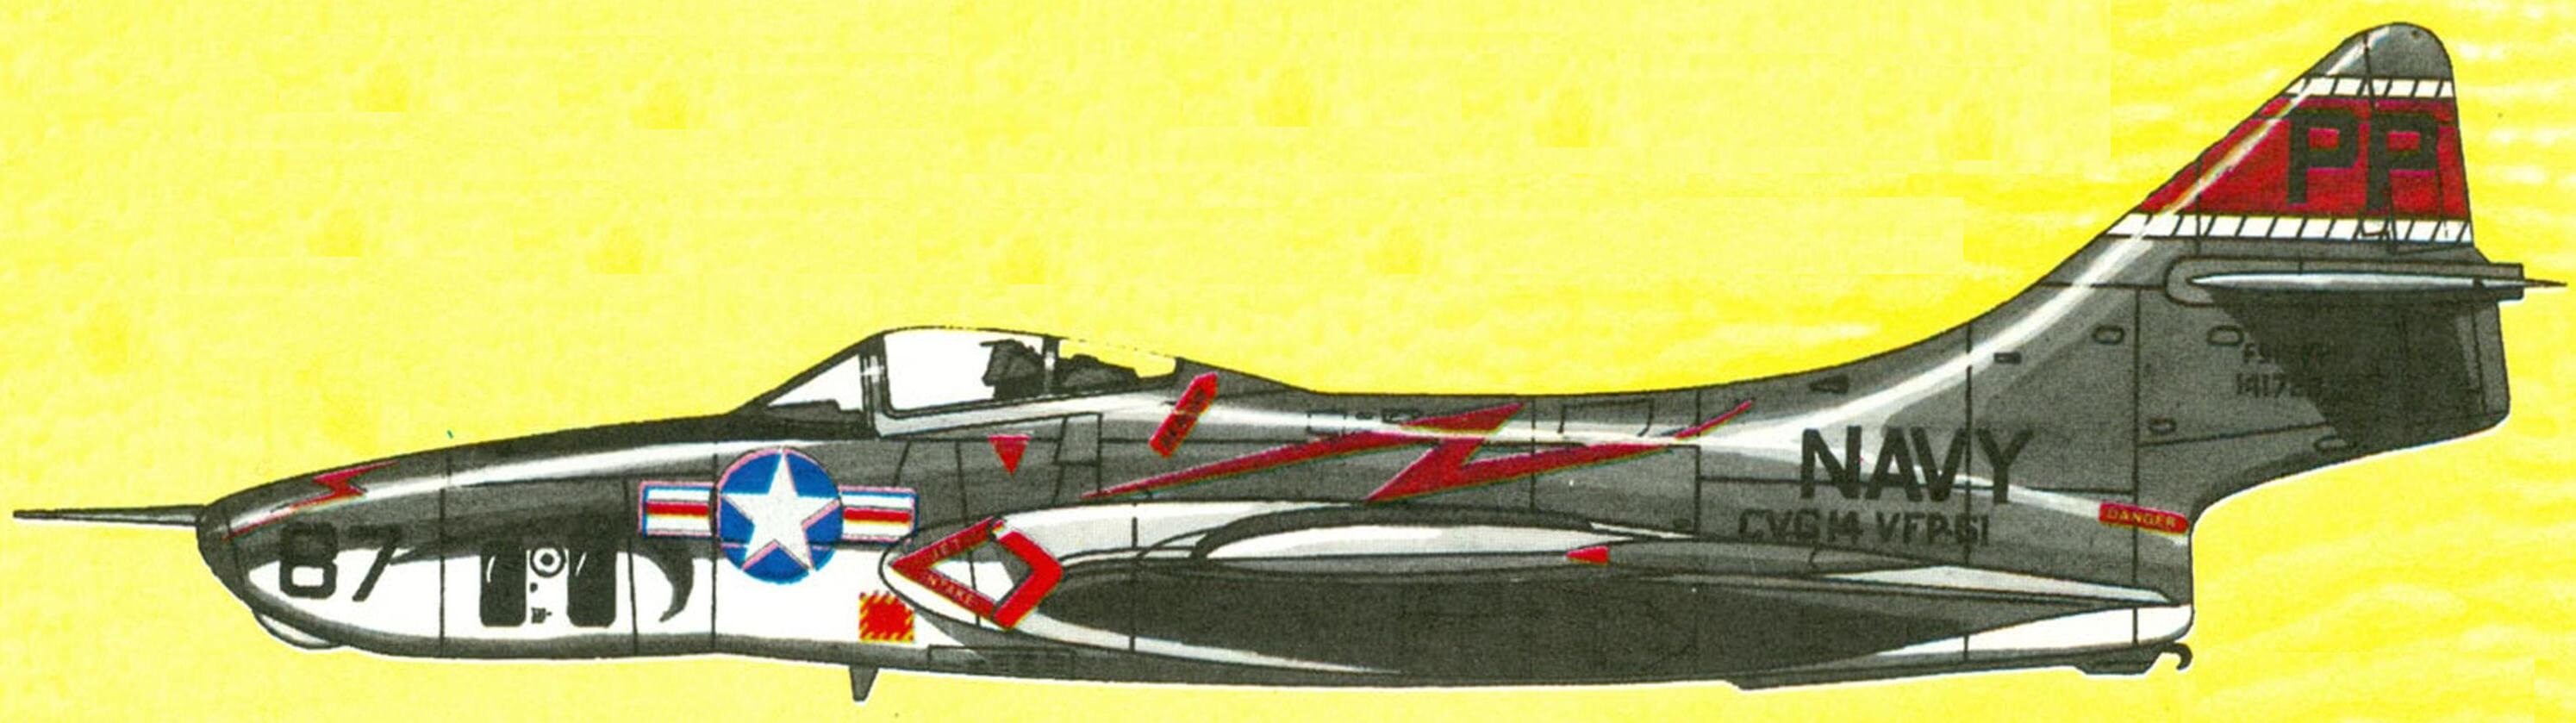 Разведчик RF-9J эскадрильи VFP-61, авианосец Hornet, 1957 г